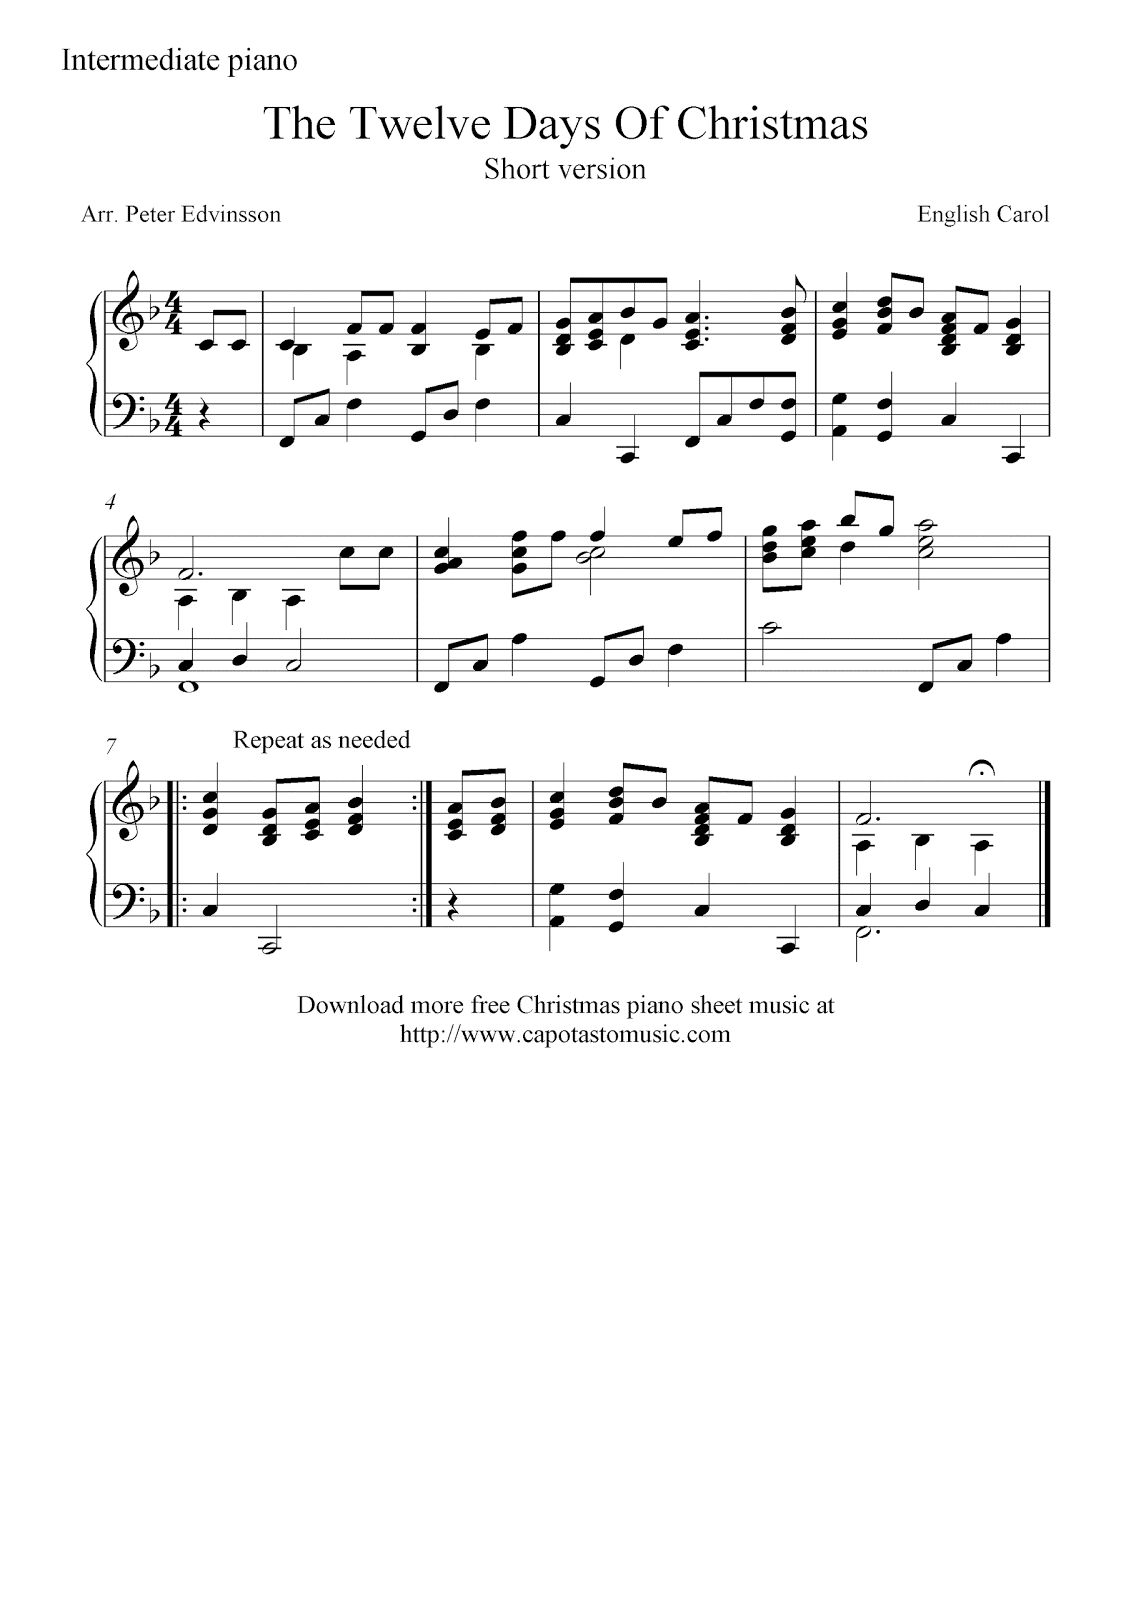 Intermediate piano sheet music for Christmas, The Twelve Days Of Christmas